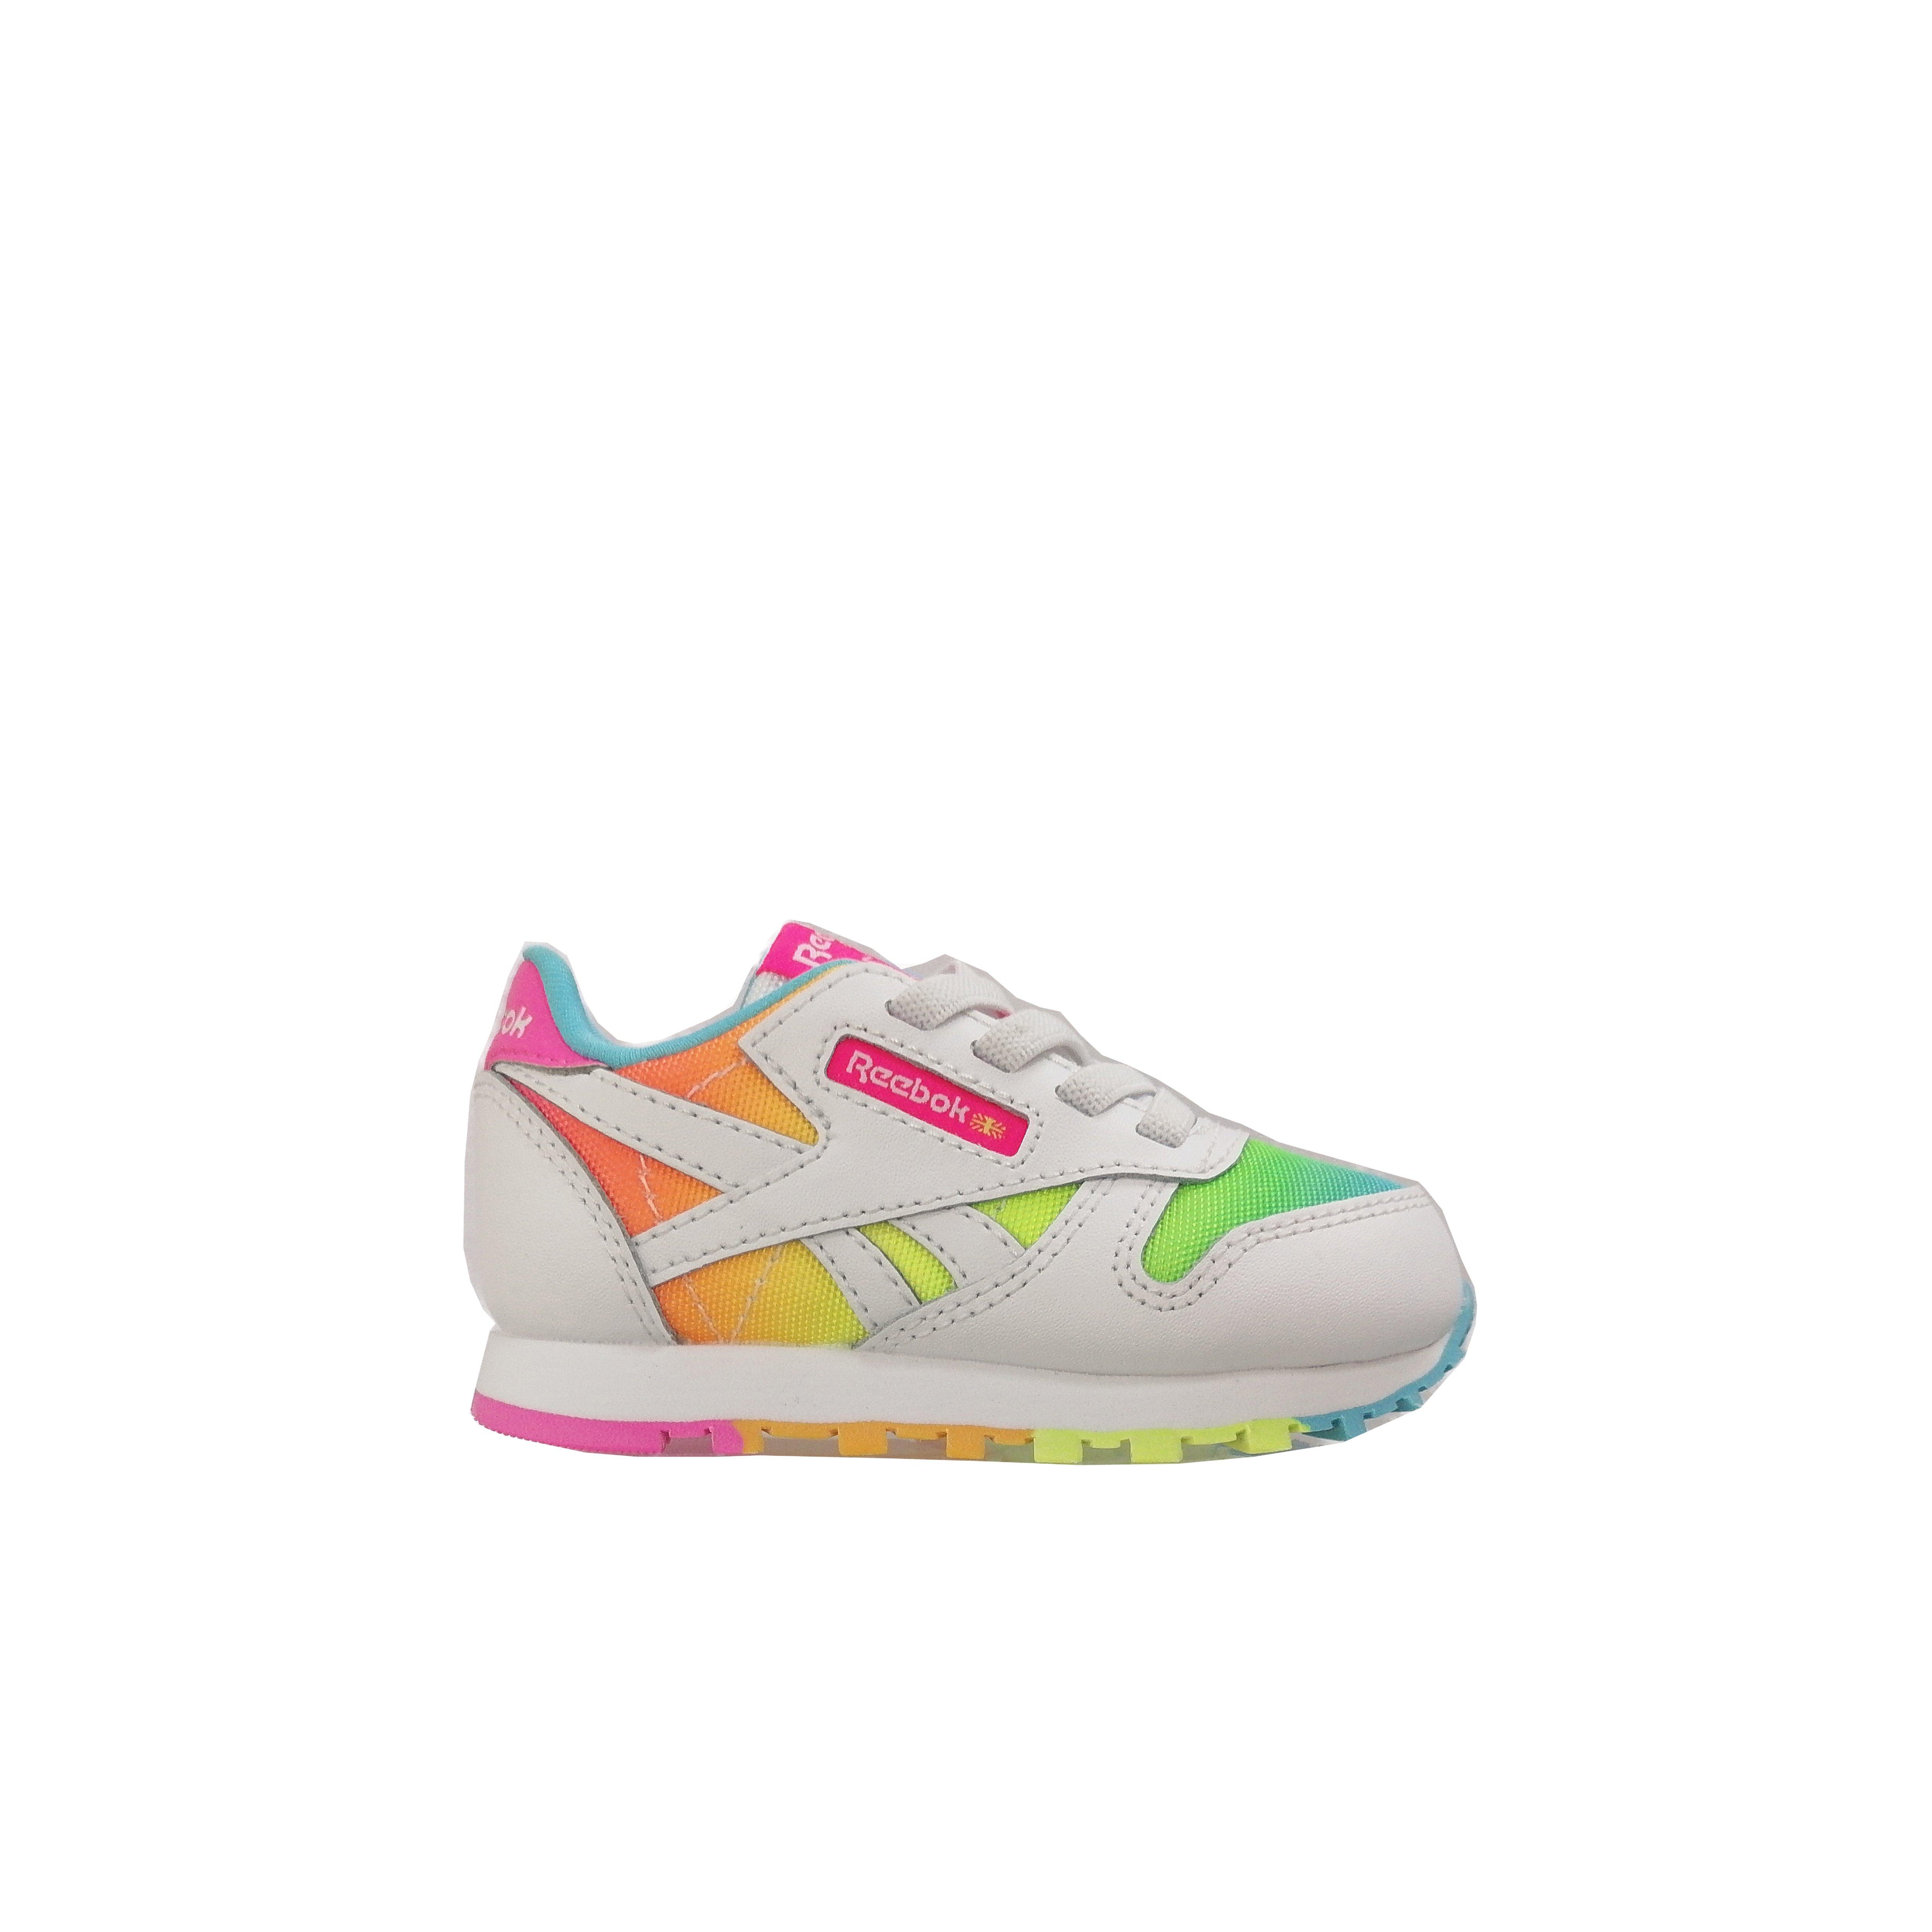 Reebok Classic Neon "White/Multi" Toddler Girls' Shoe